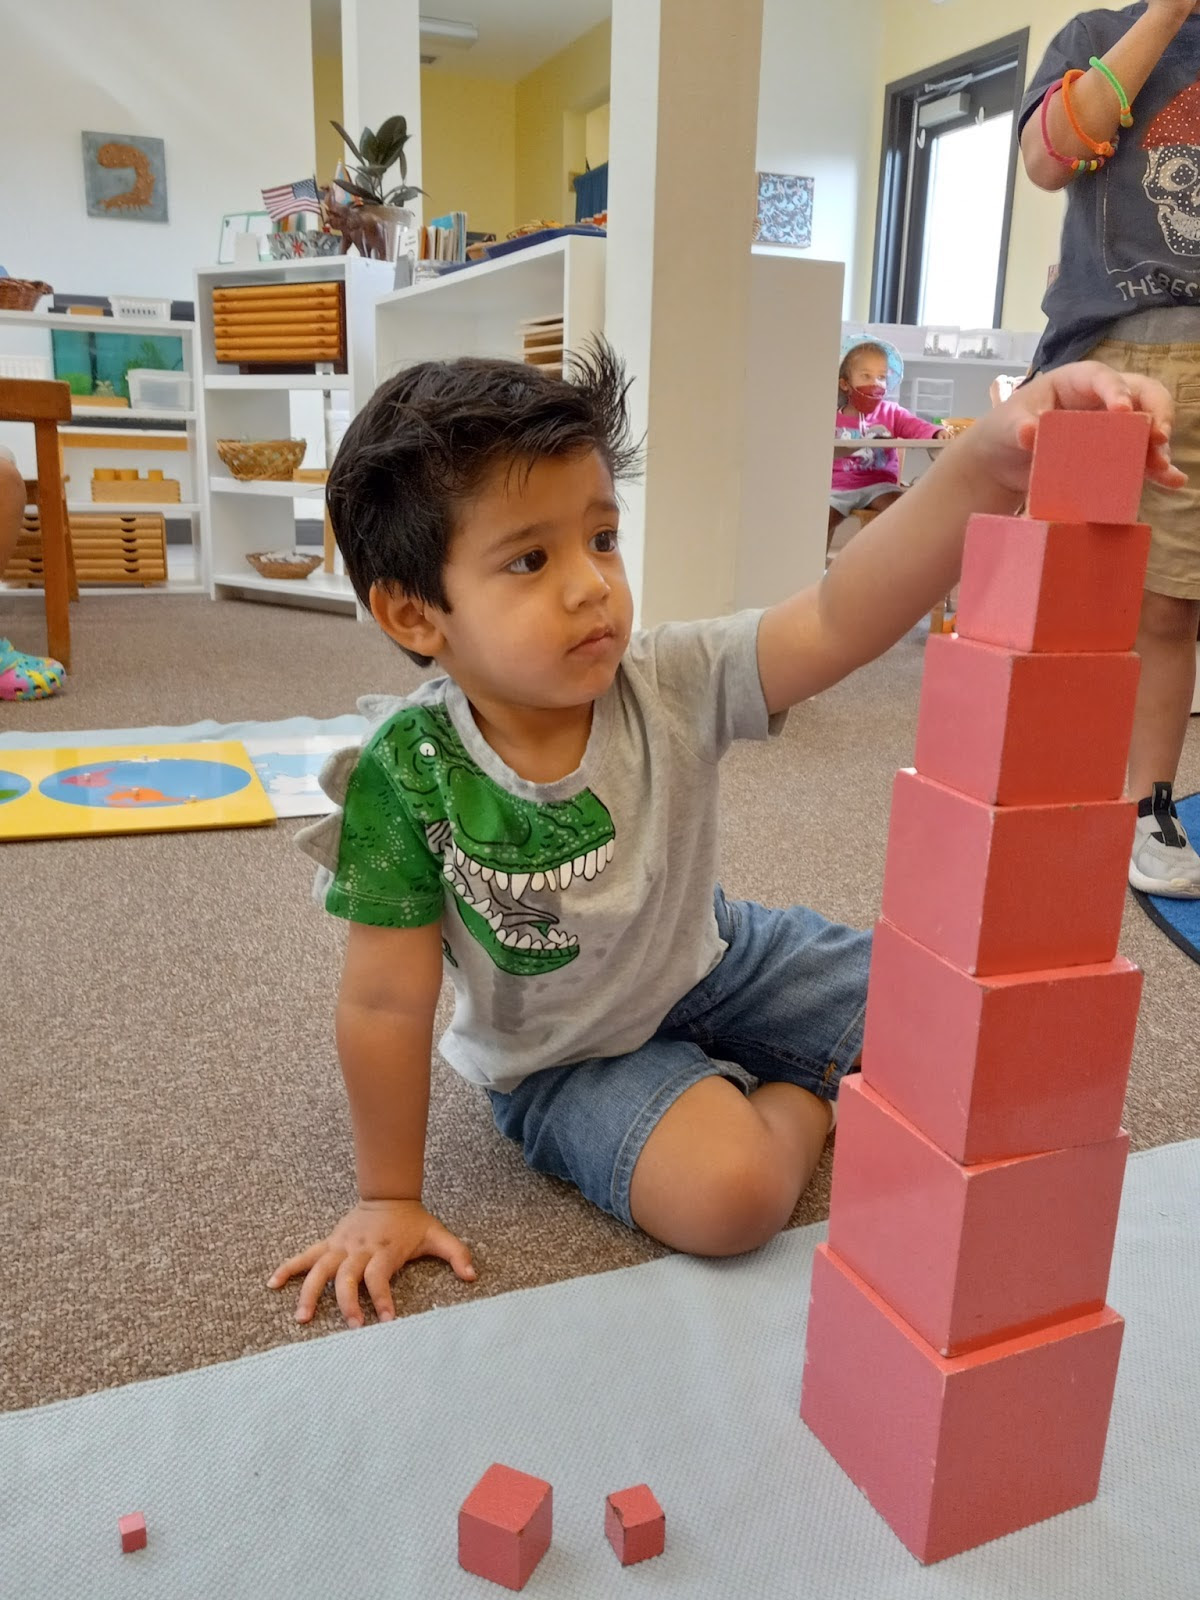 Inside Escuela: Montessori Materials &#8211; The Development of Writing